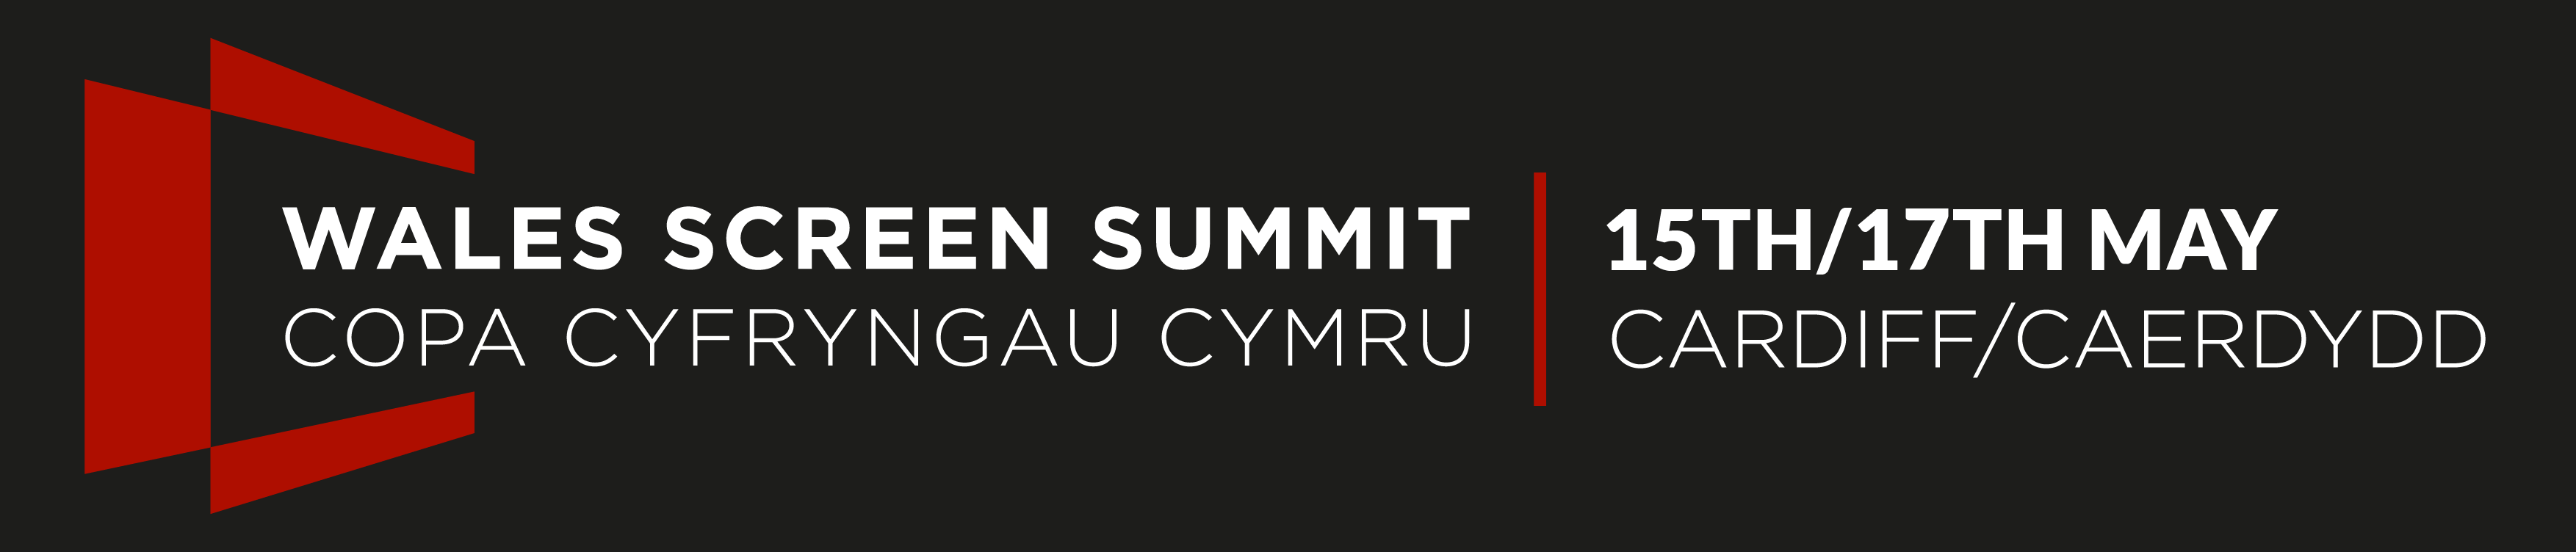 Wales Screen Summit assets